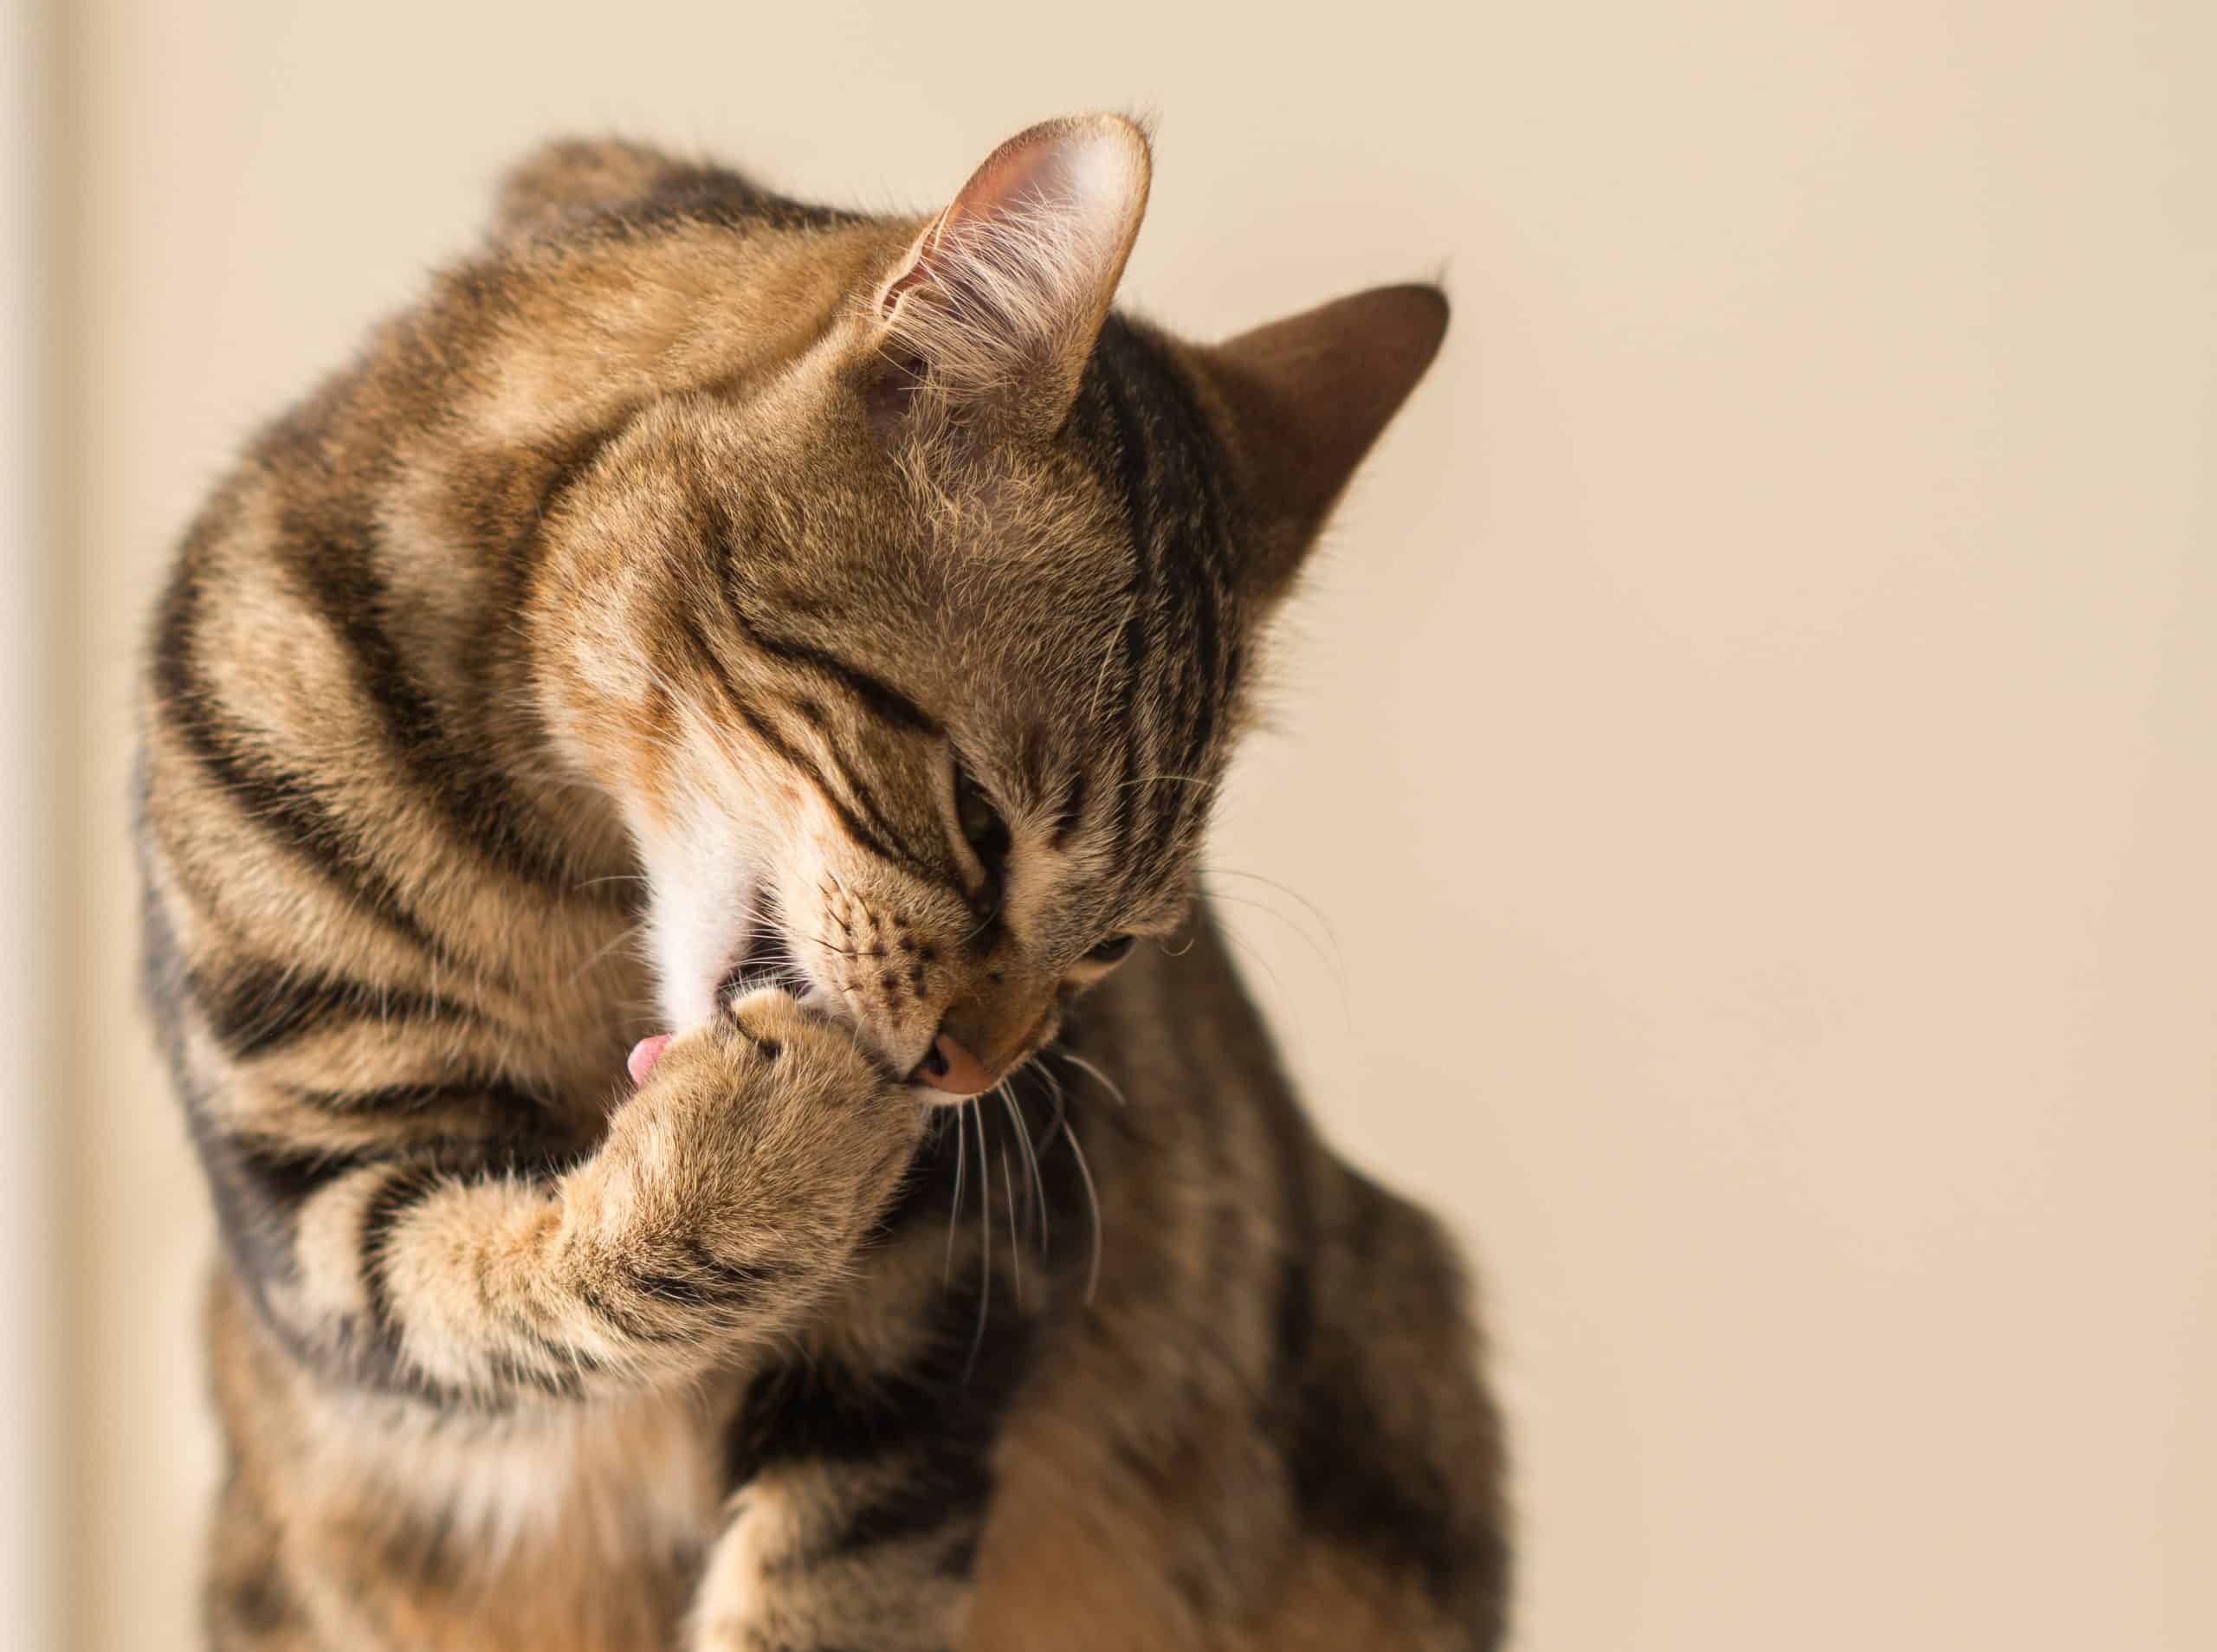 Beautiful feline cat licking himself at home